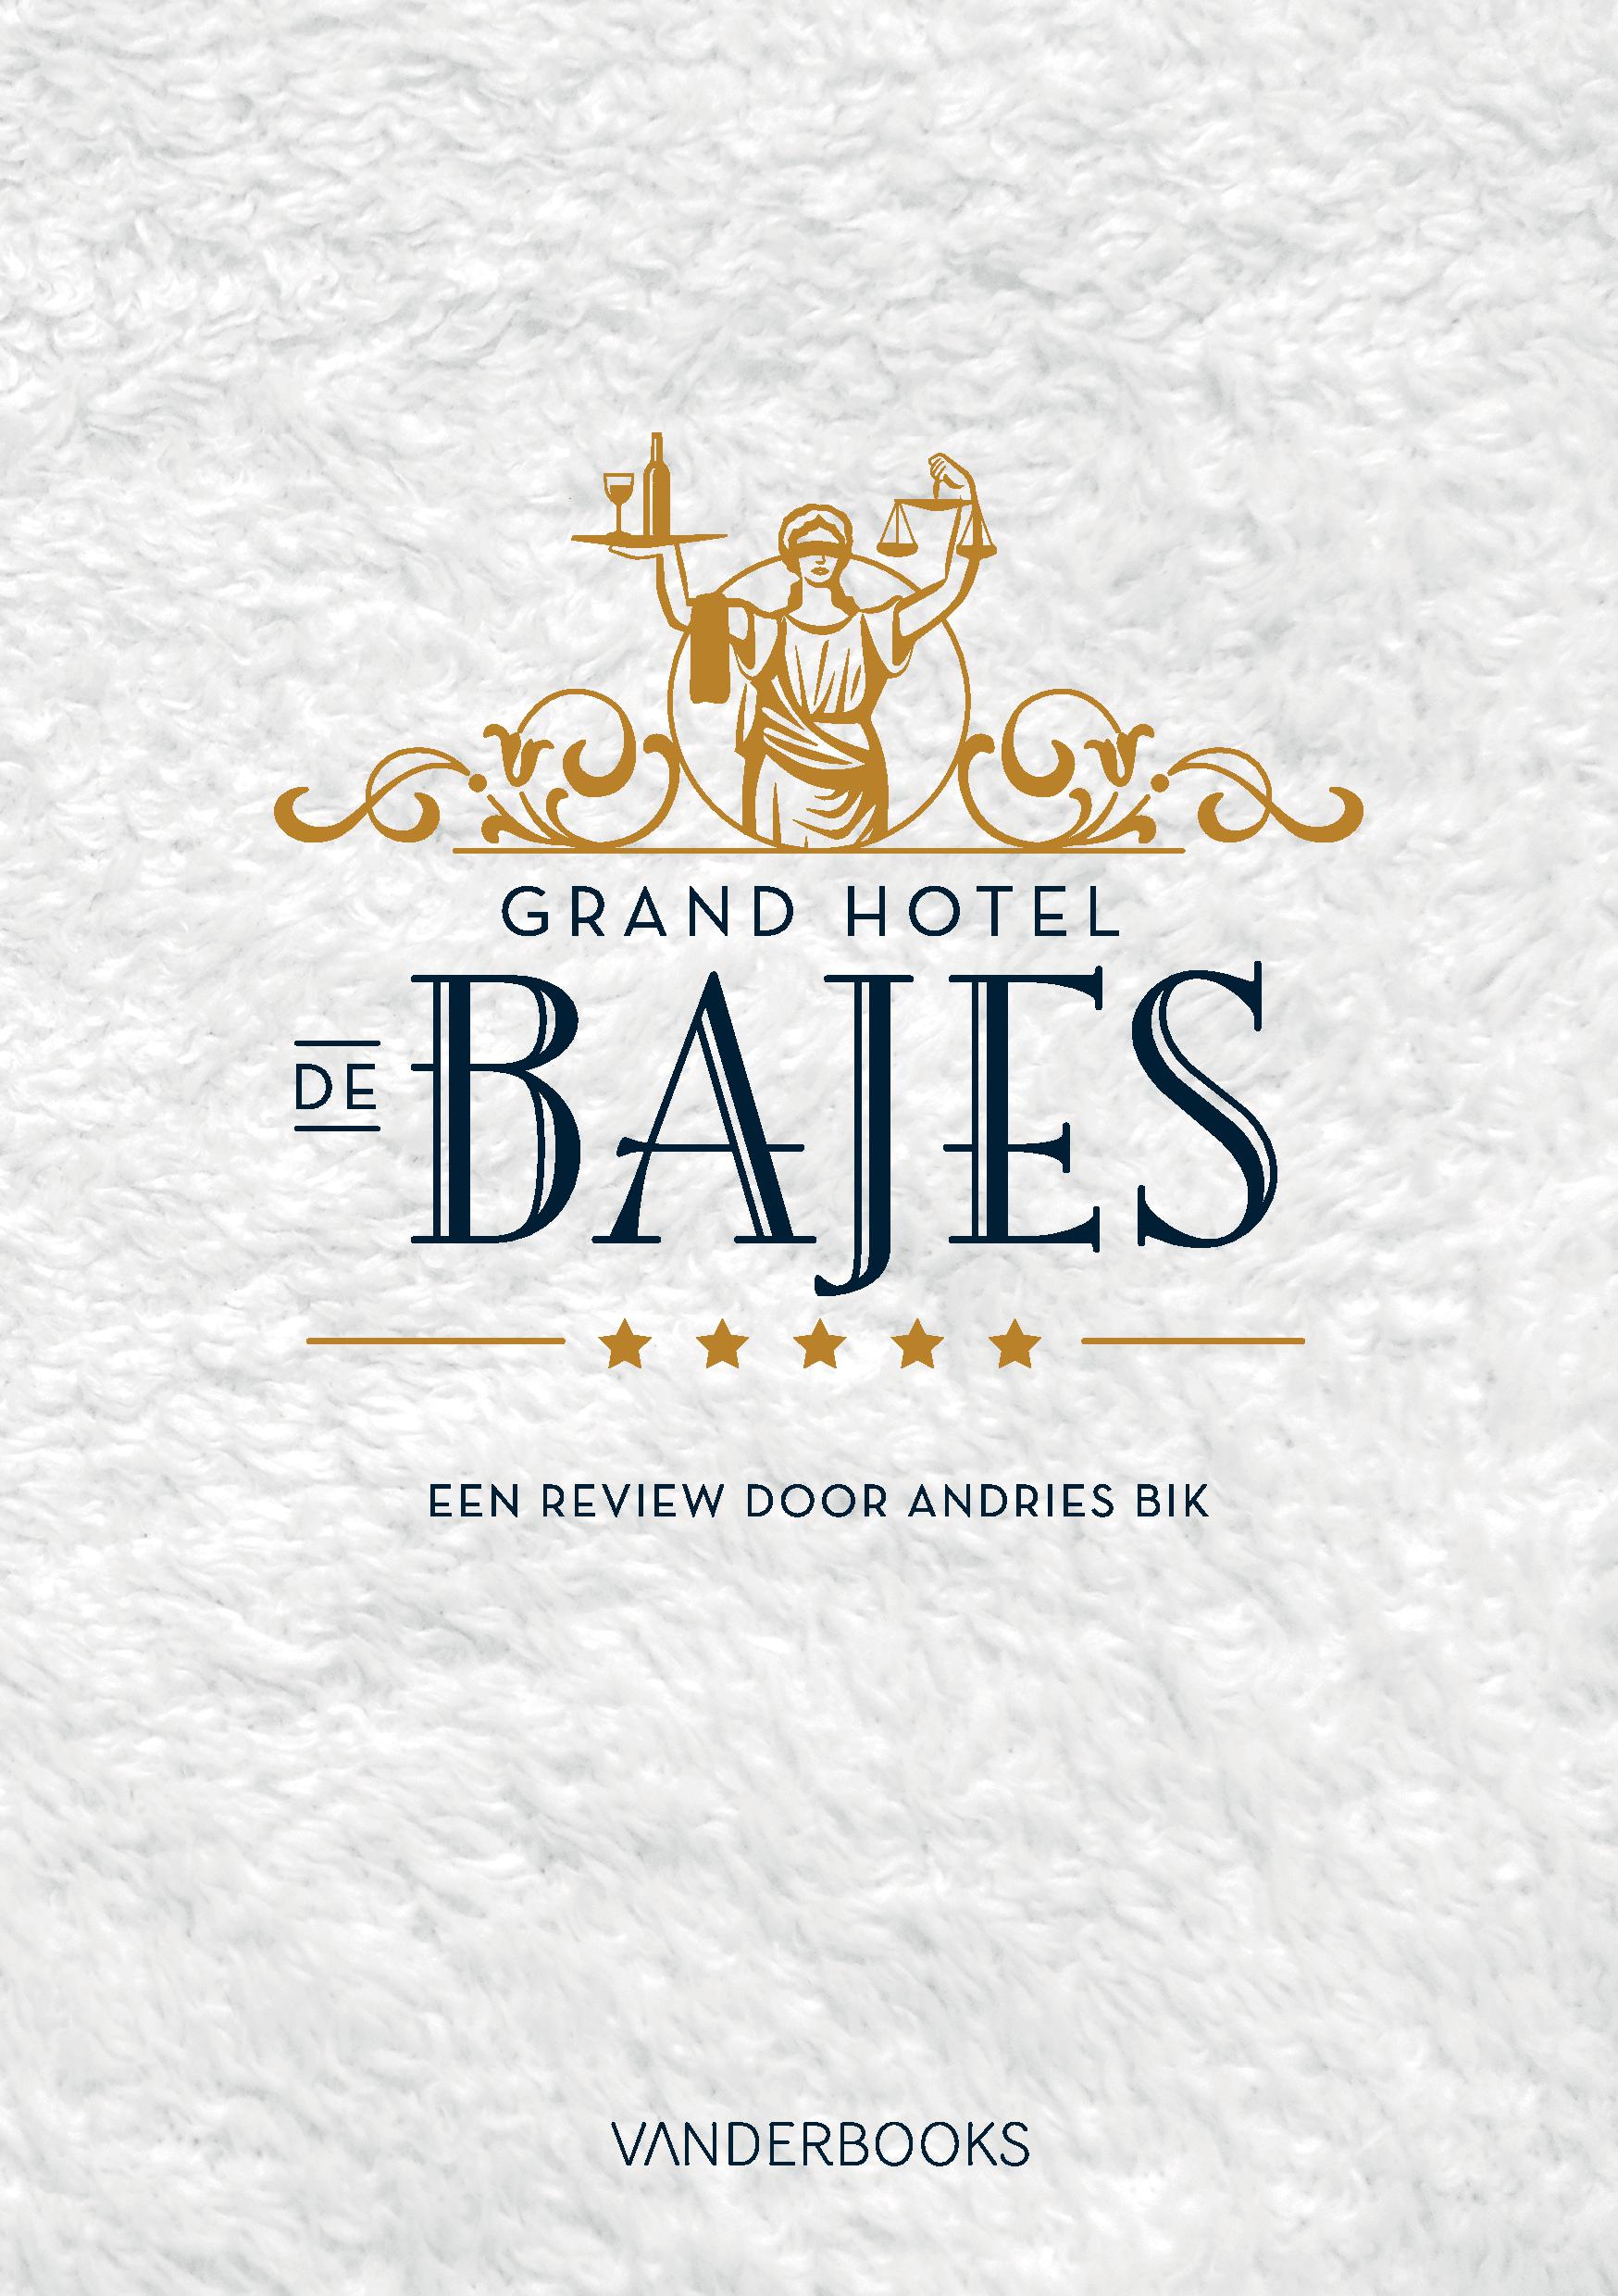 Grand Hotel de Bajes